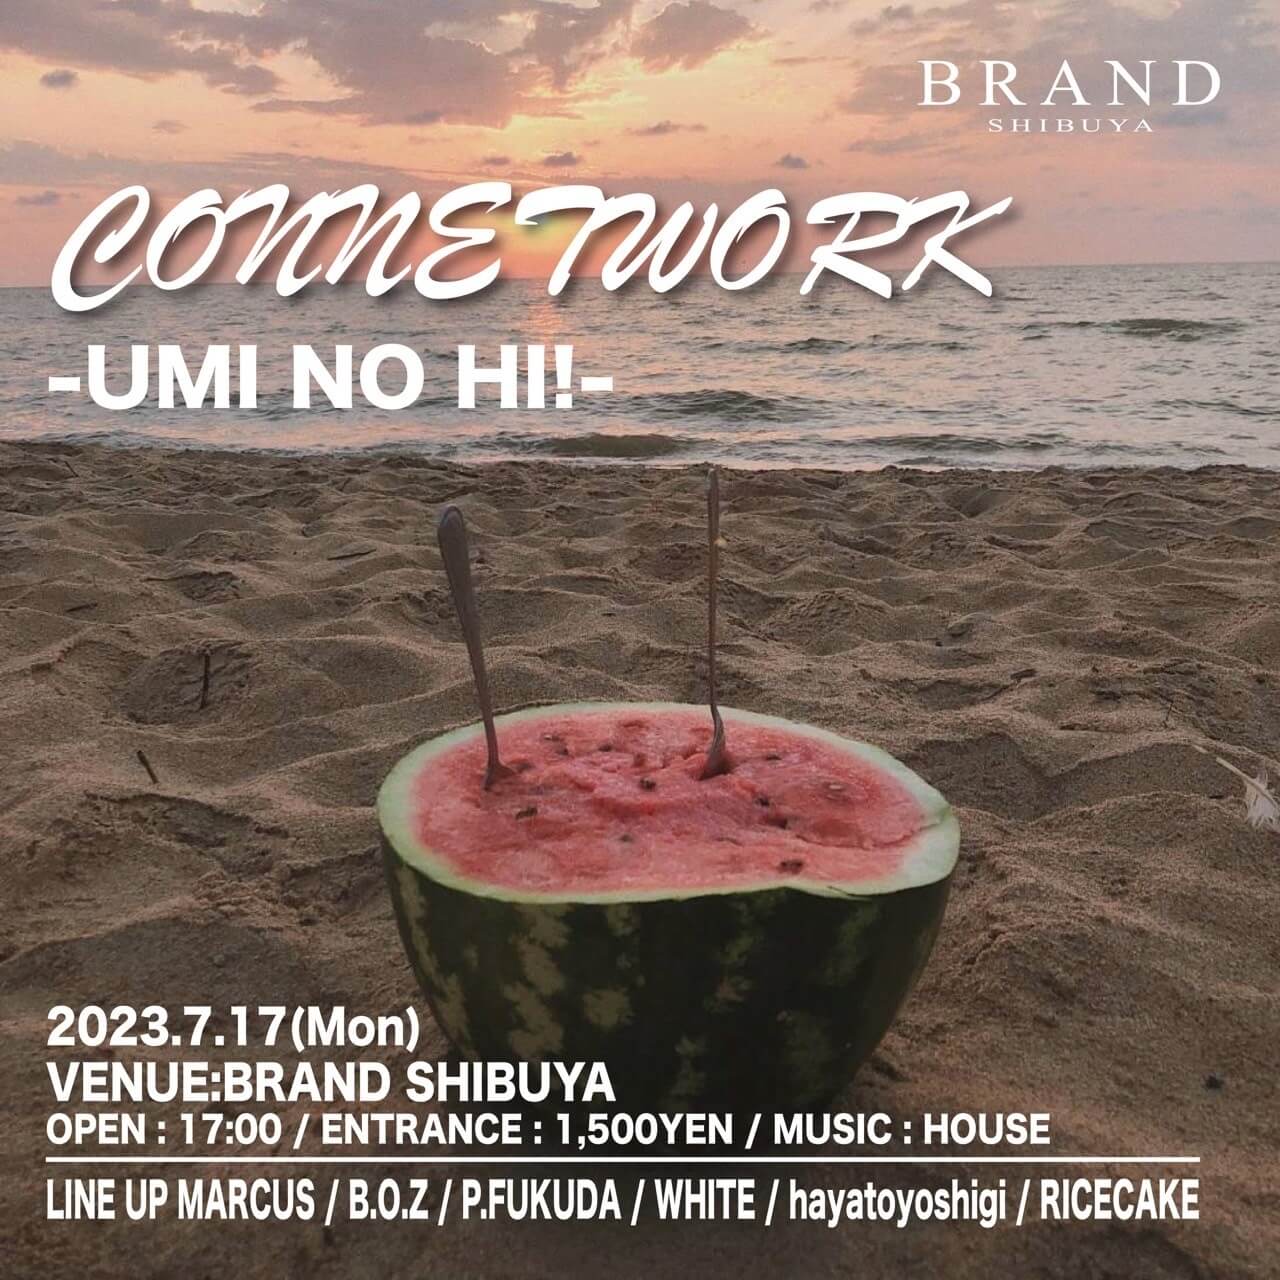 CONNETWORK -UMI NO HI!- 2023年07月17日（月曜日）に渋谷 クラブのBRAND SHIBUYAで開催されるHOUSEイベント